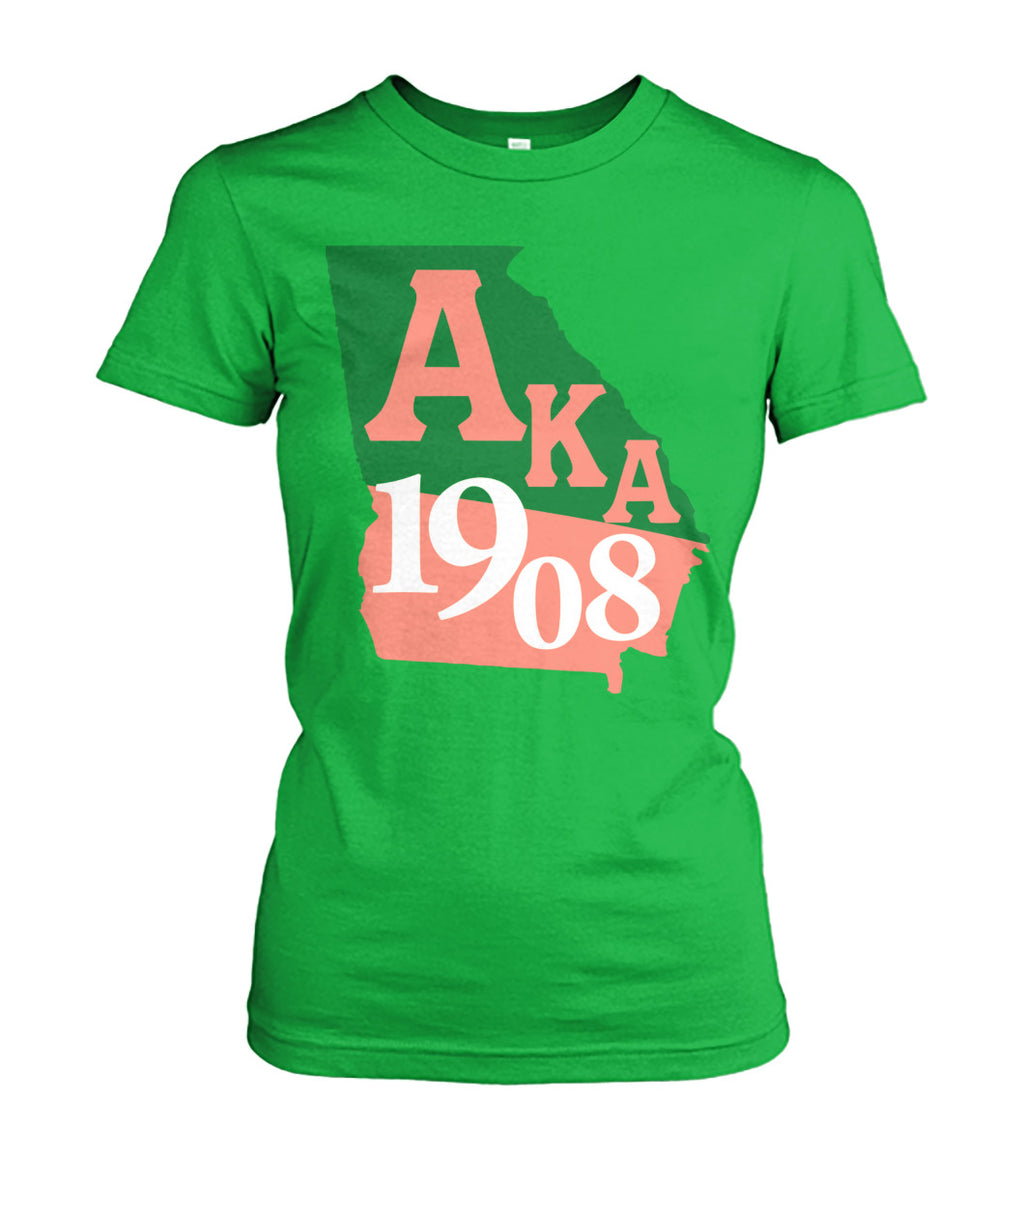 AKA Georgia Shirts- Limited Edition